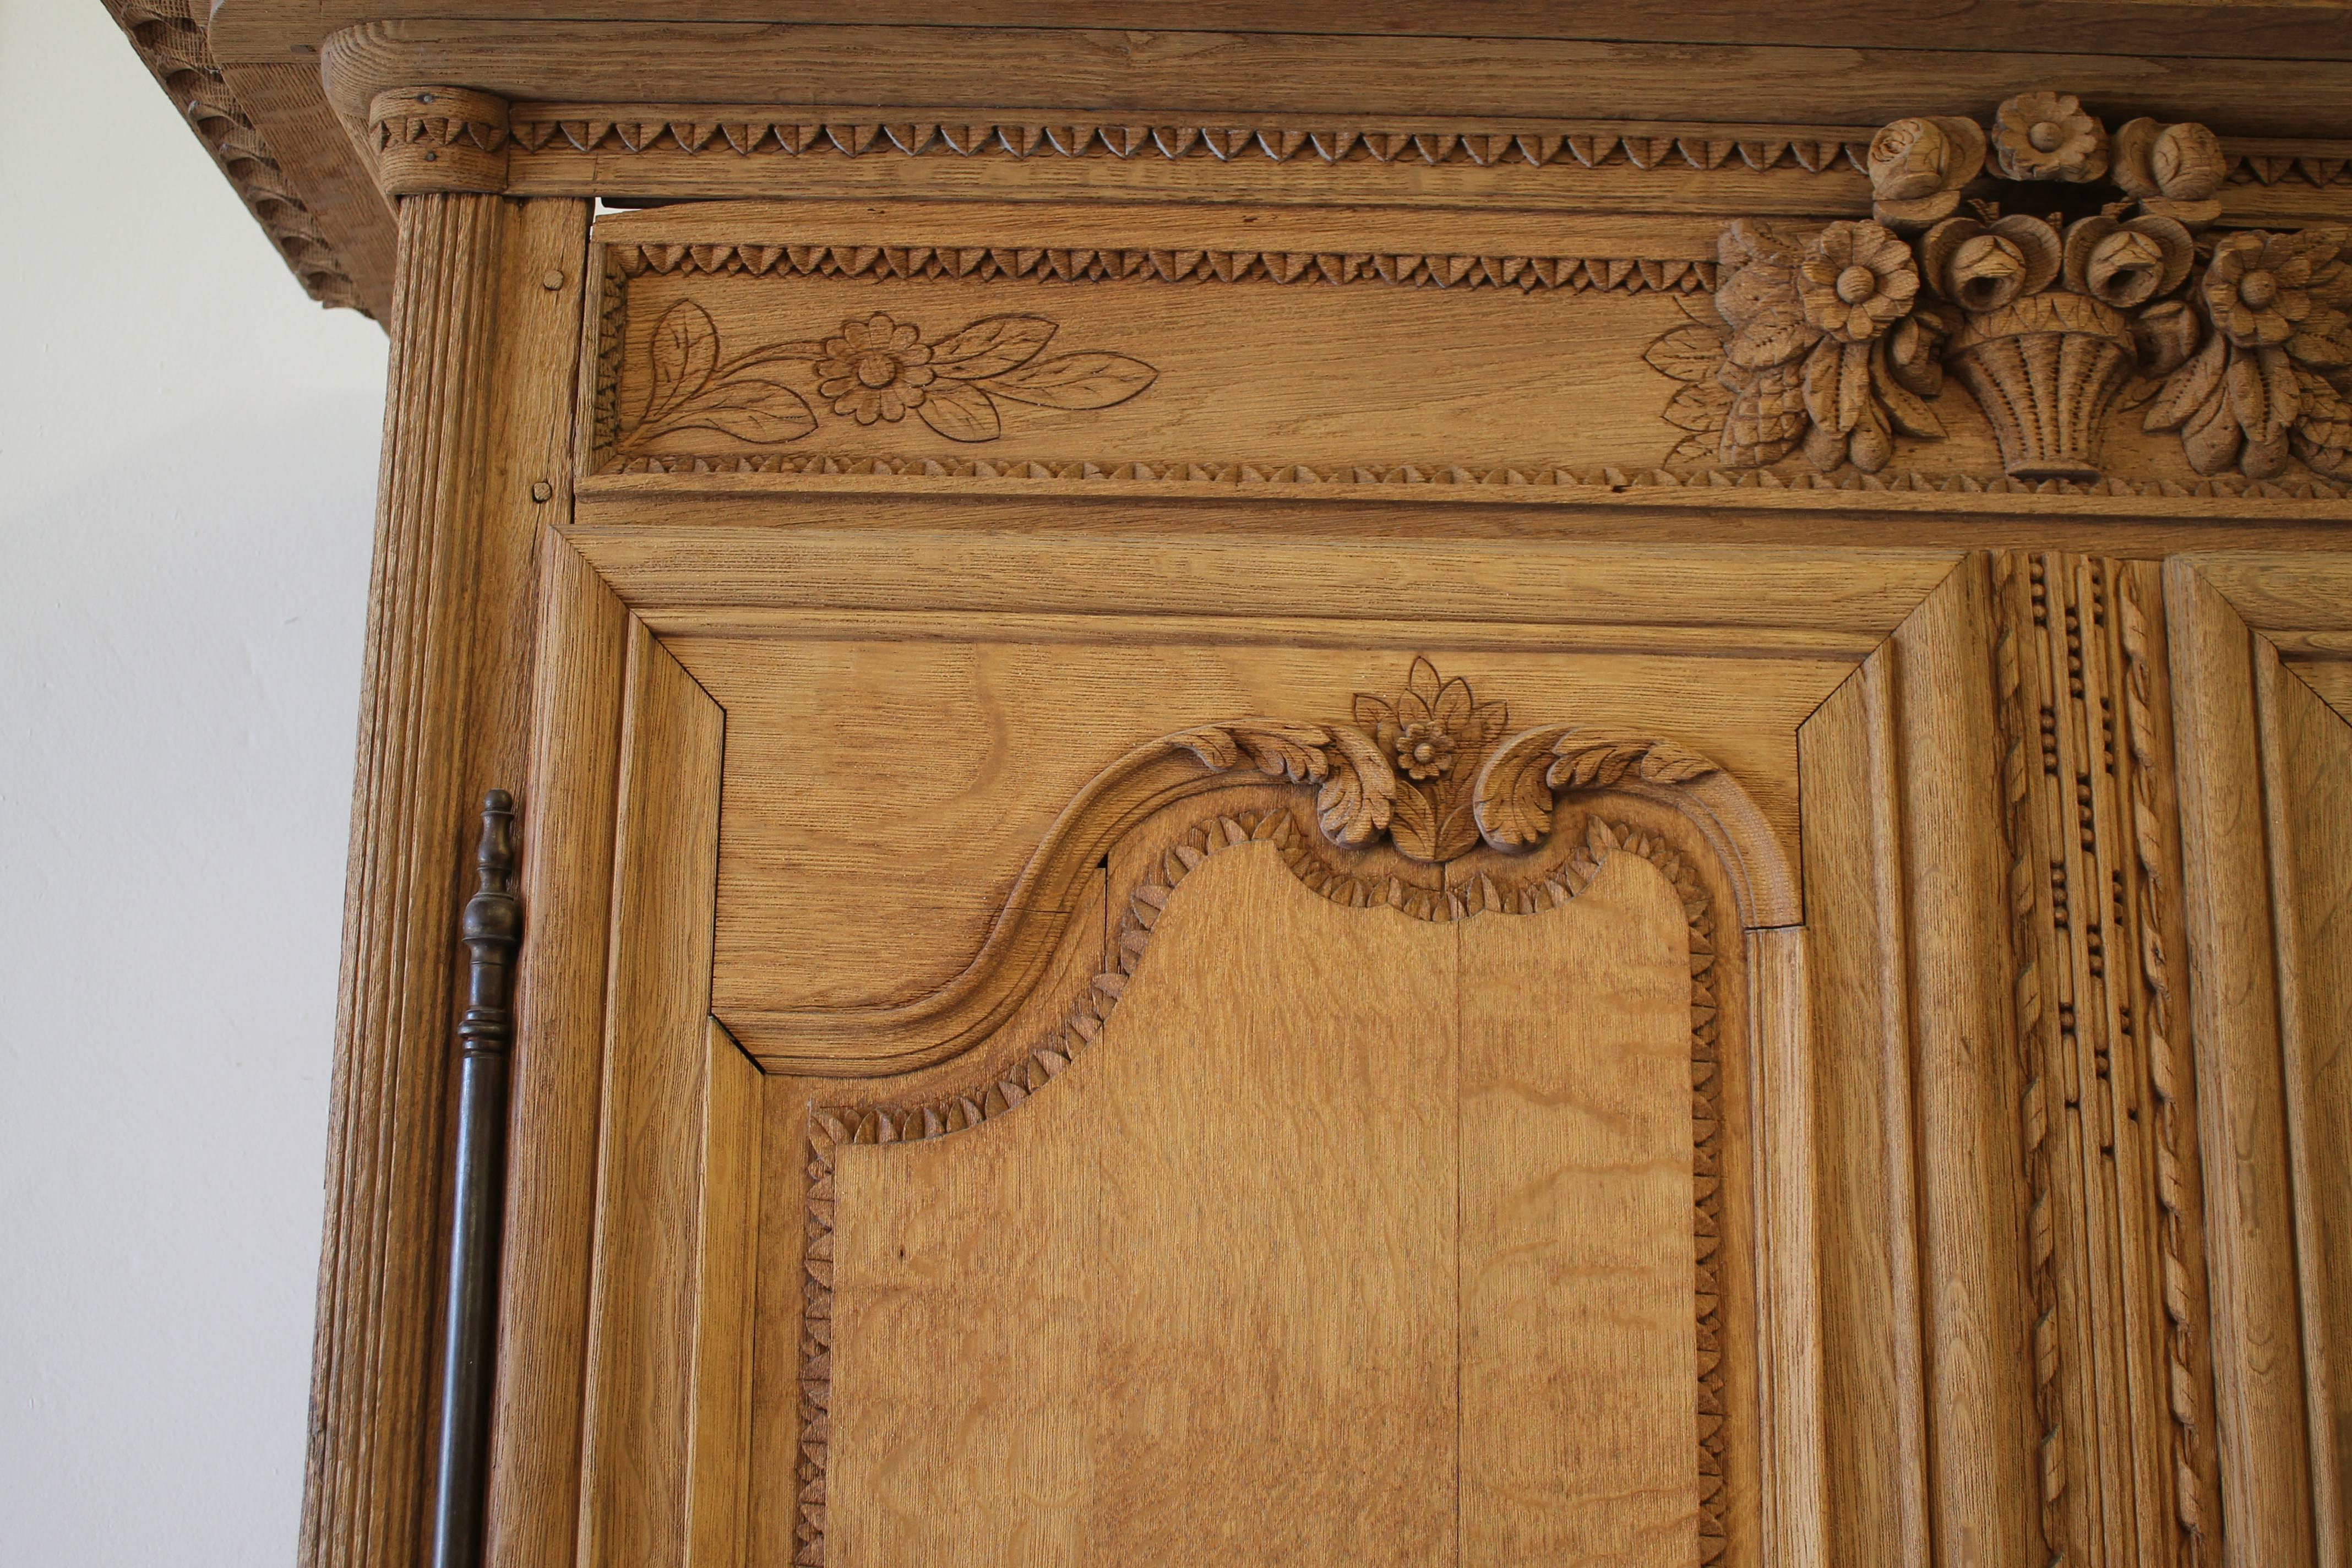 quarter sawn white oak cabinets